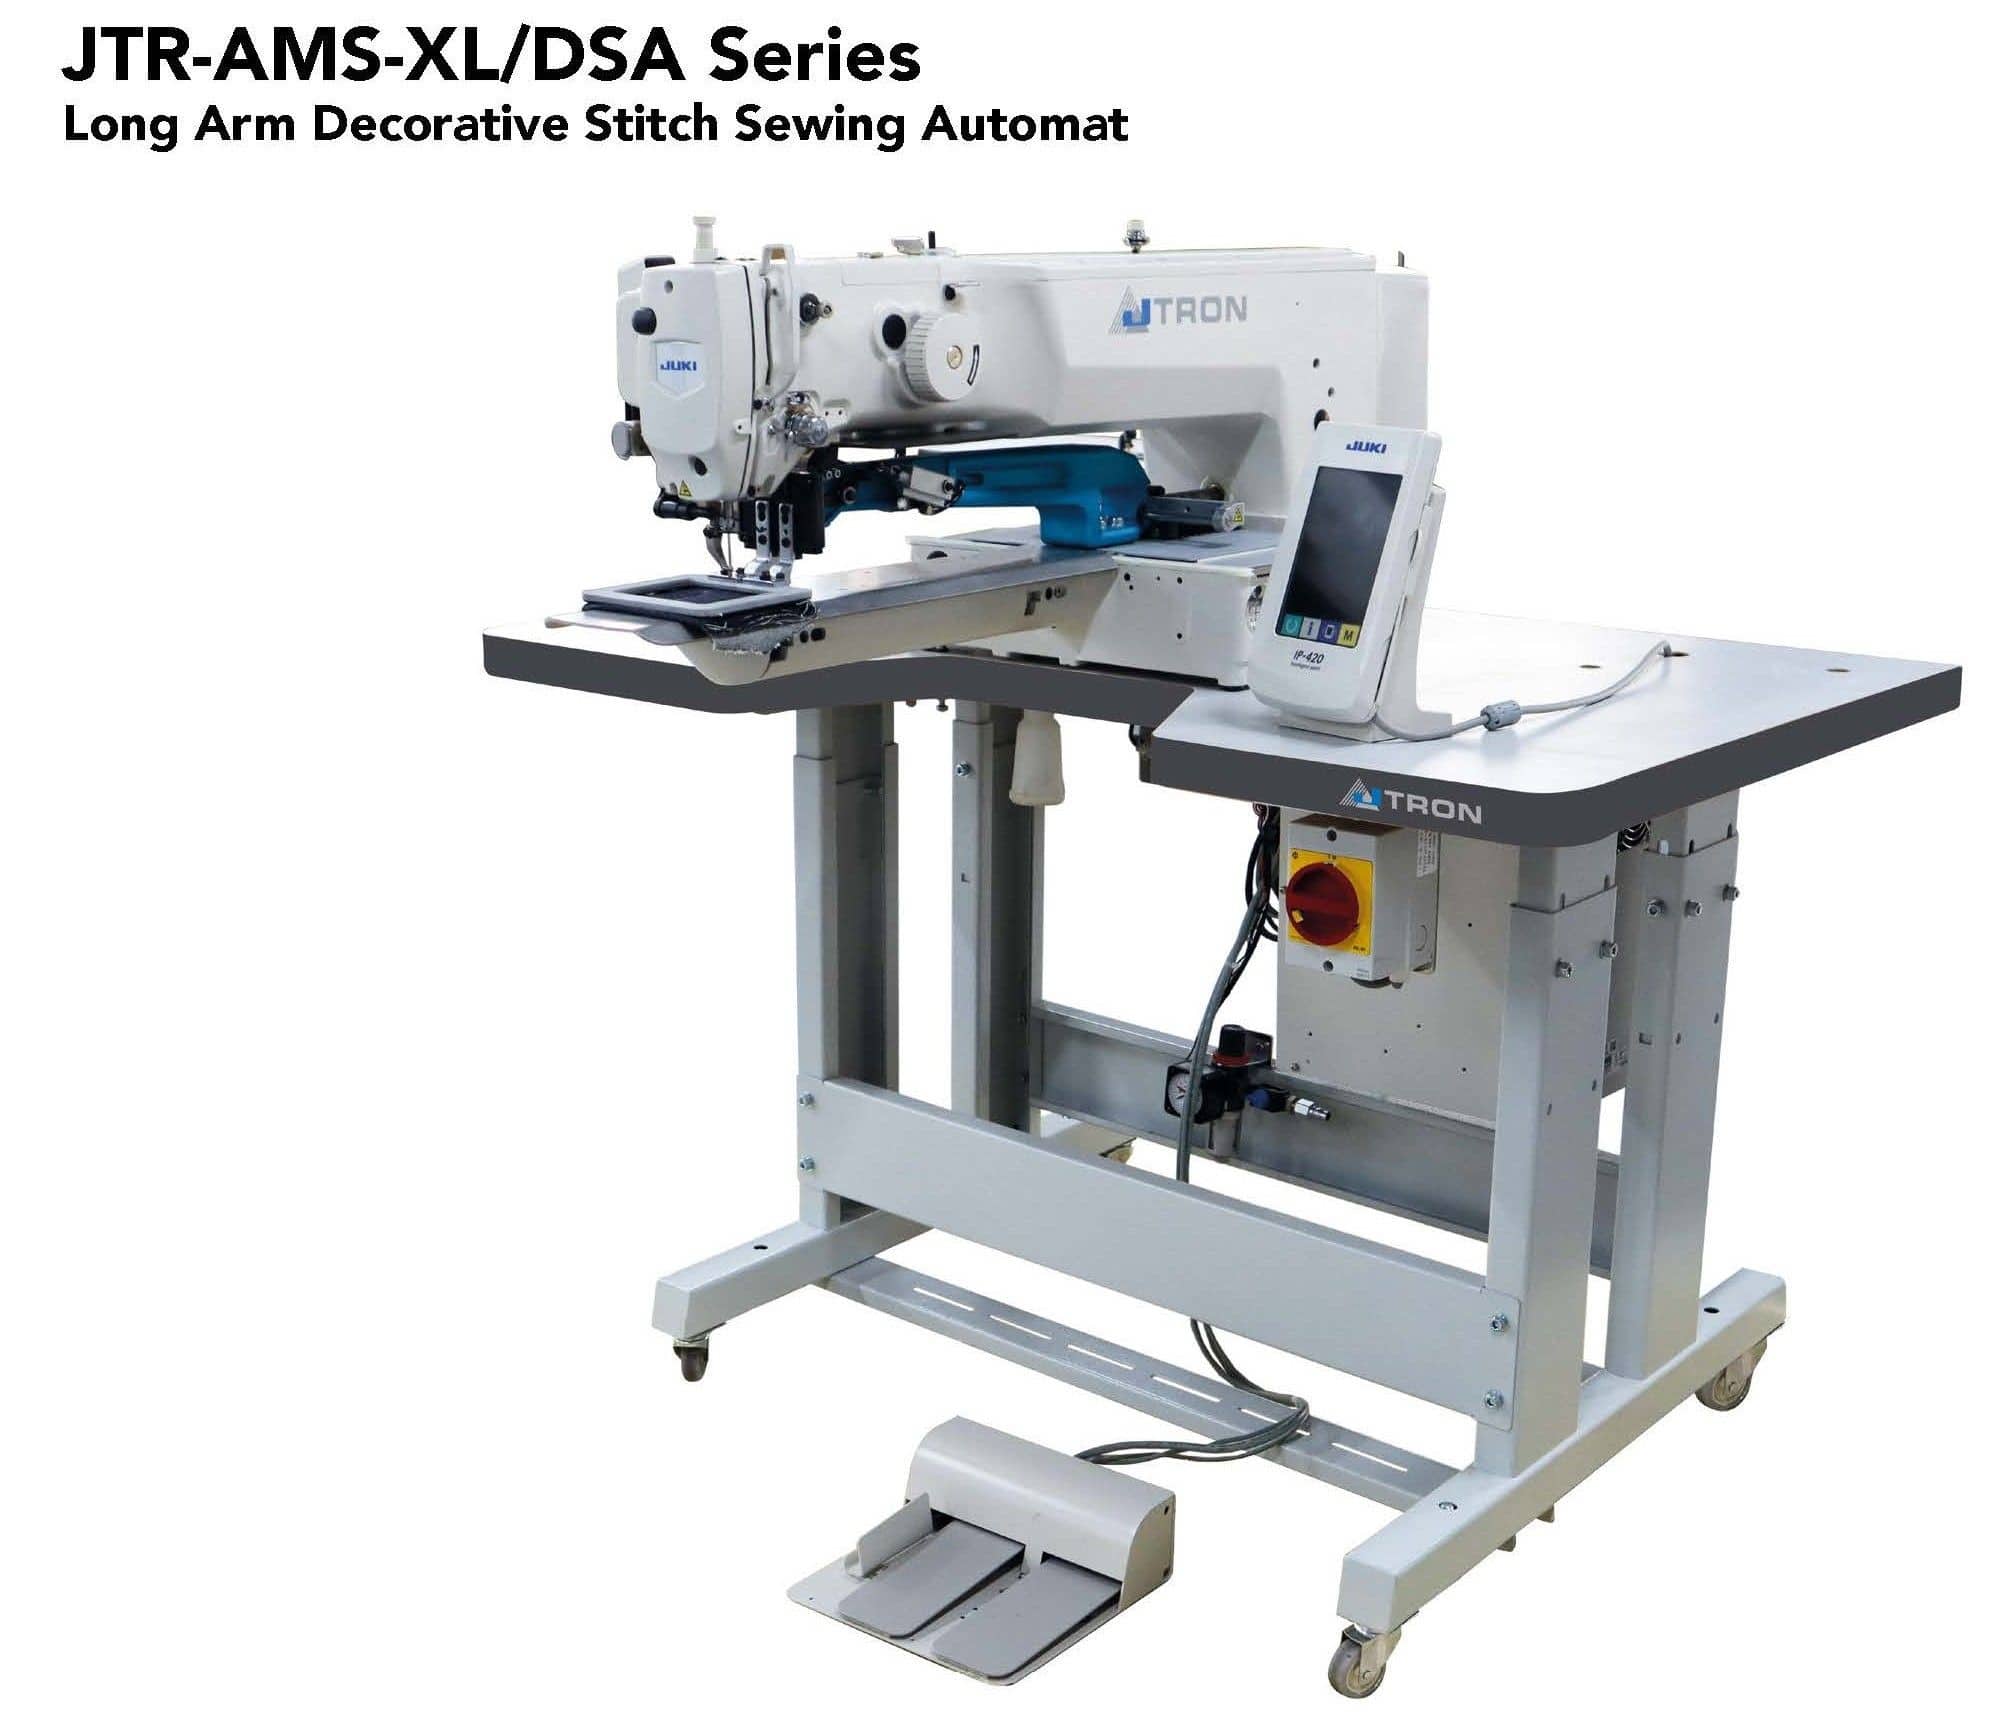 JTRON JTR-AMS-XL/DSA Series
Long Arm Decorative Stitch Sewing Automat